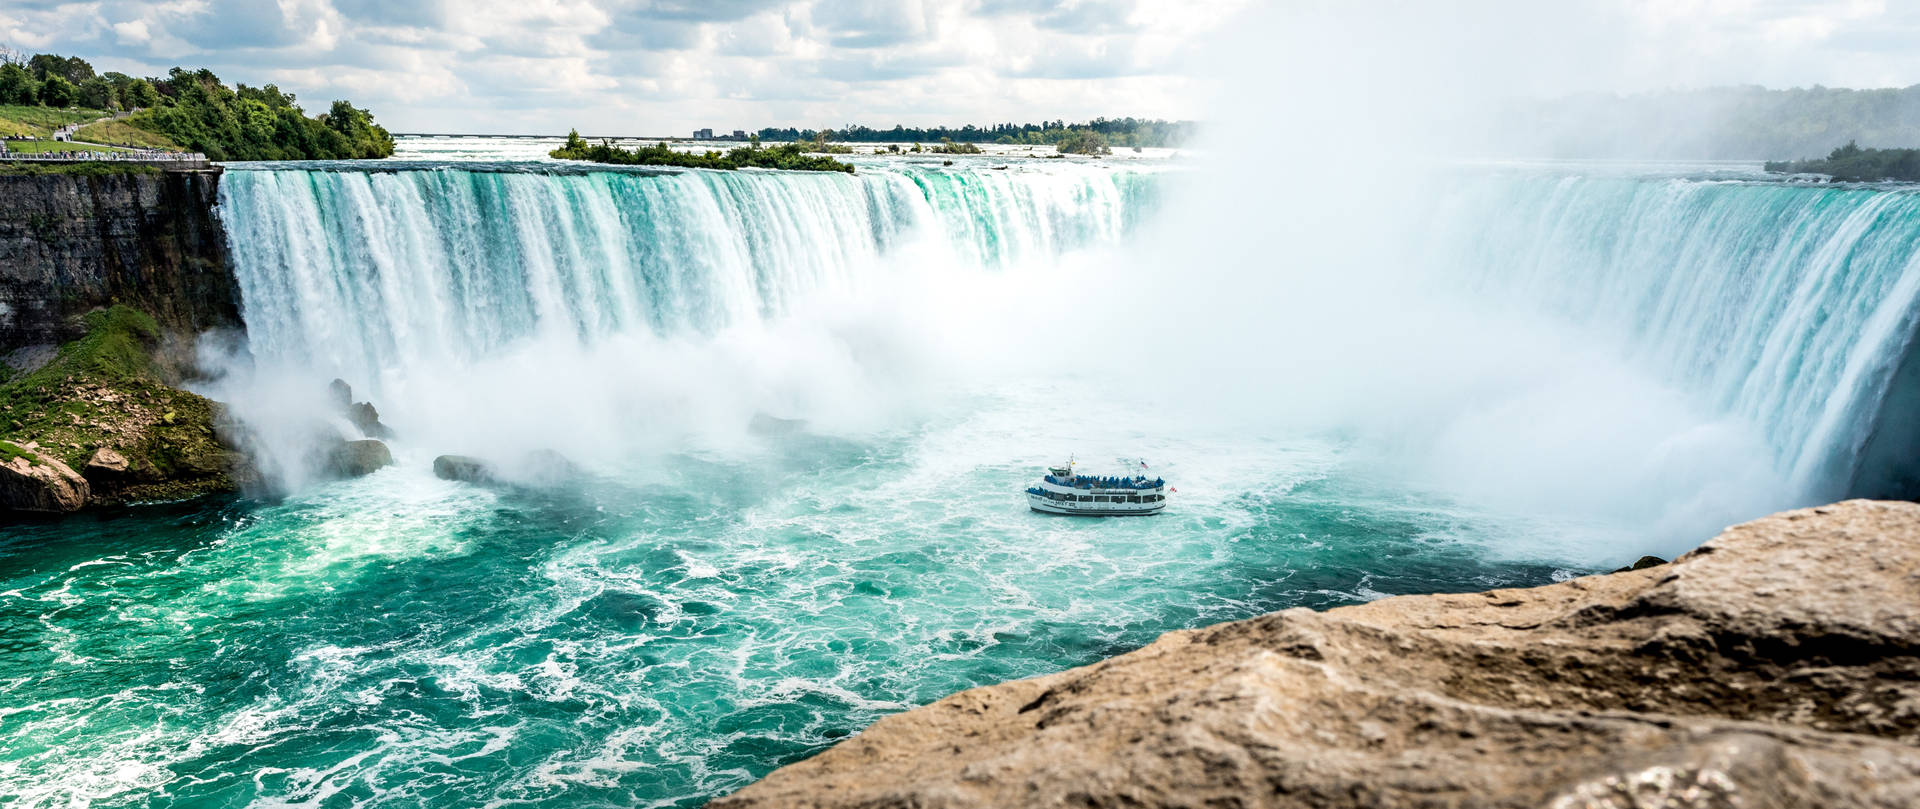 Niagara Falls 5888X2483 Wallpaper and Background Image